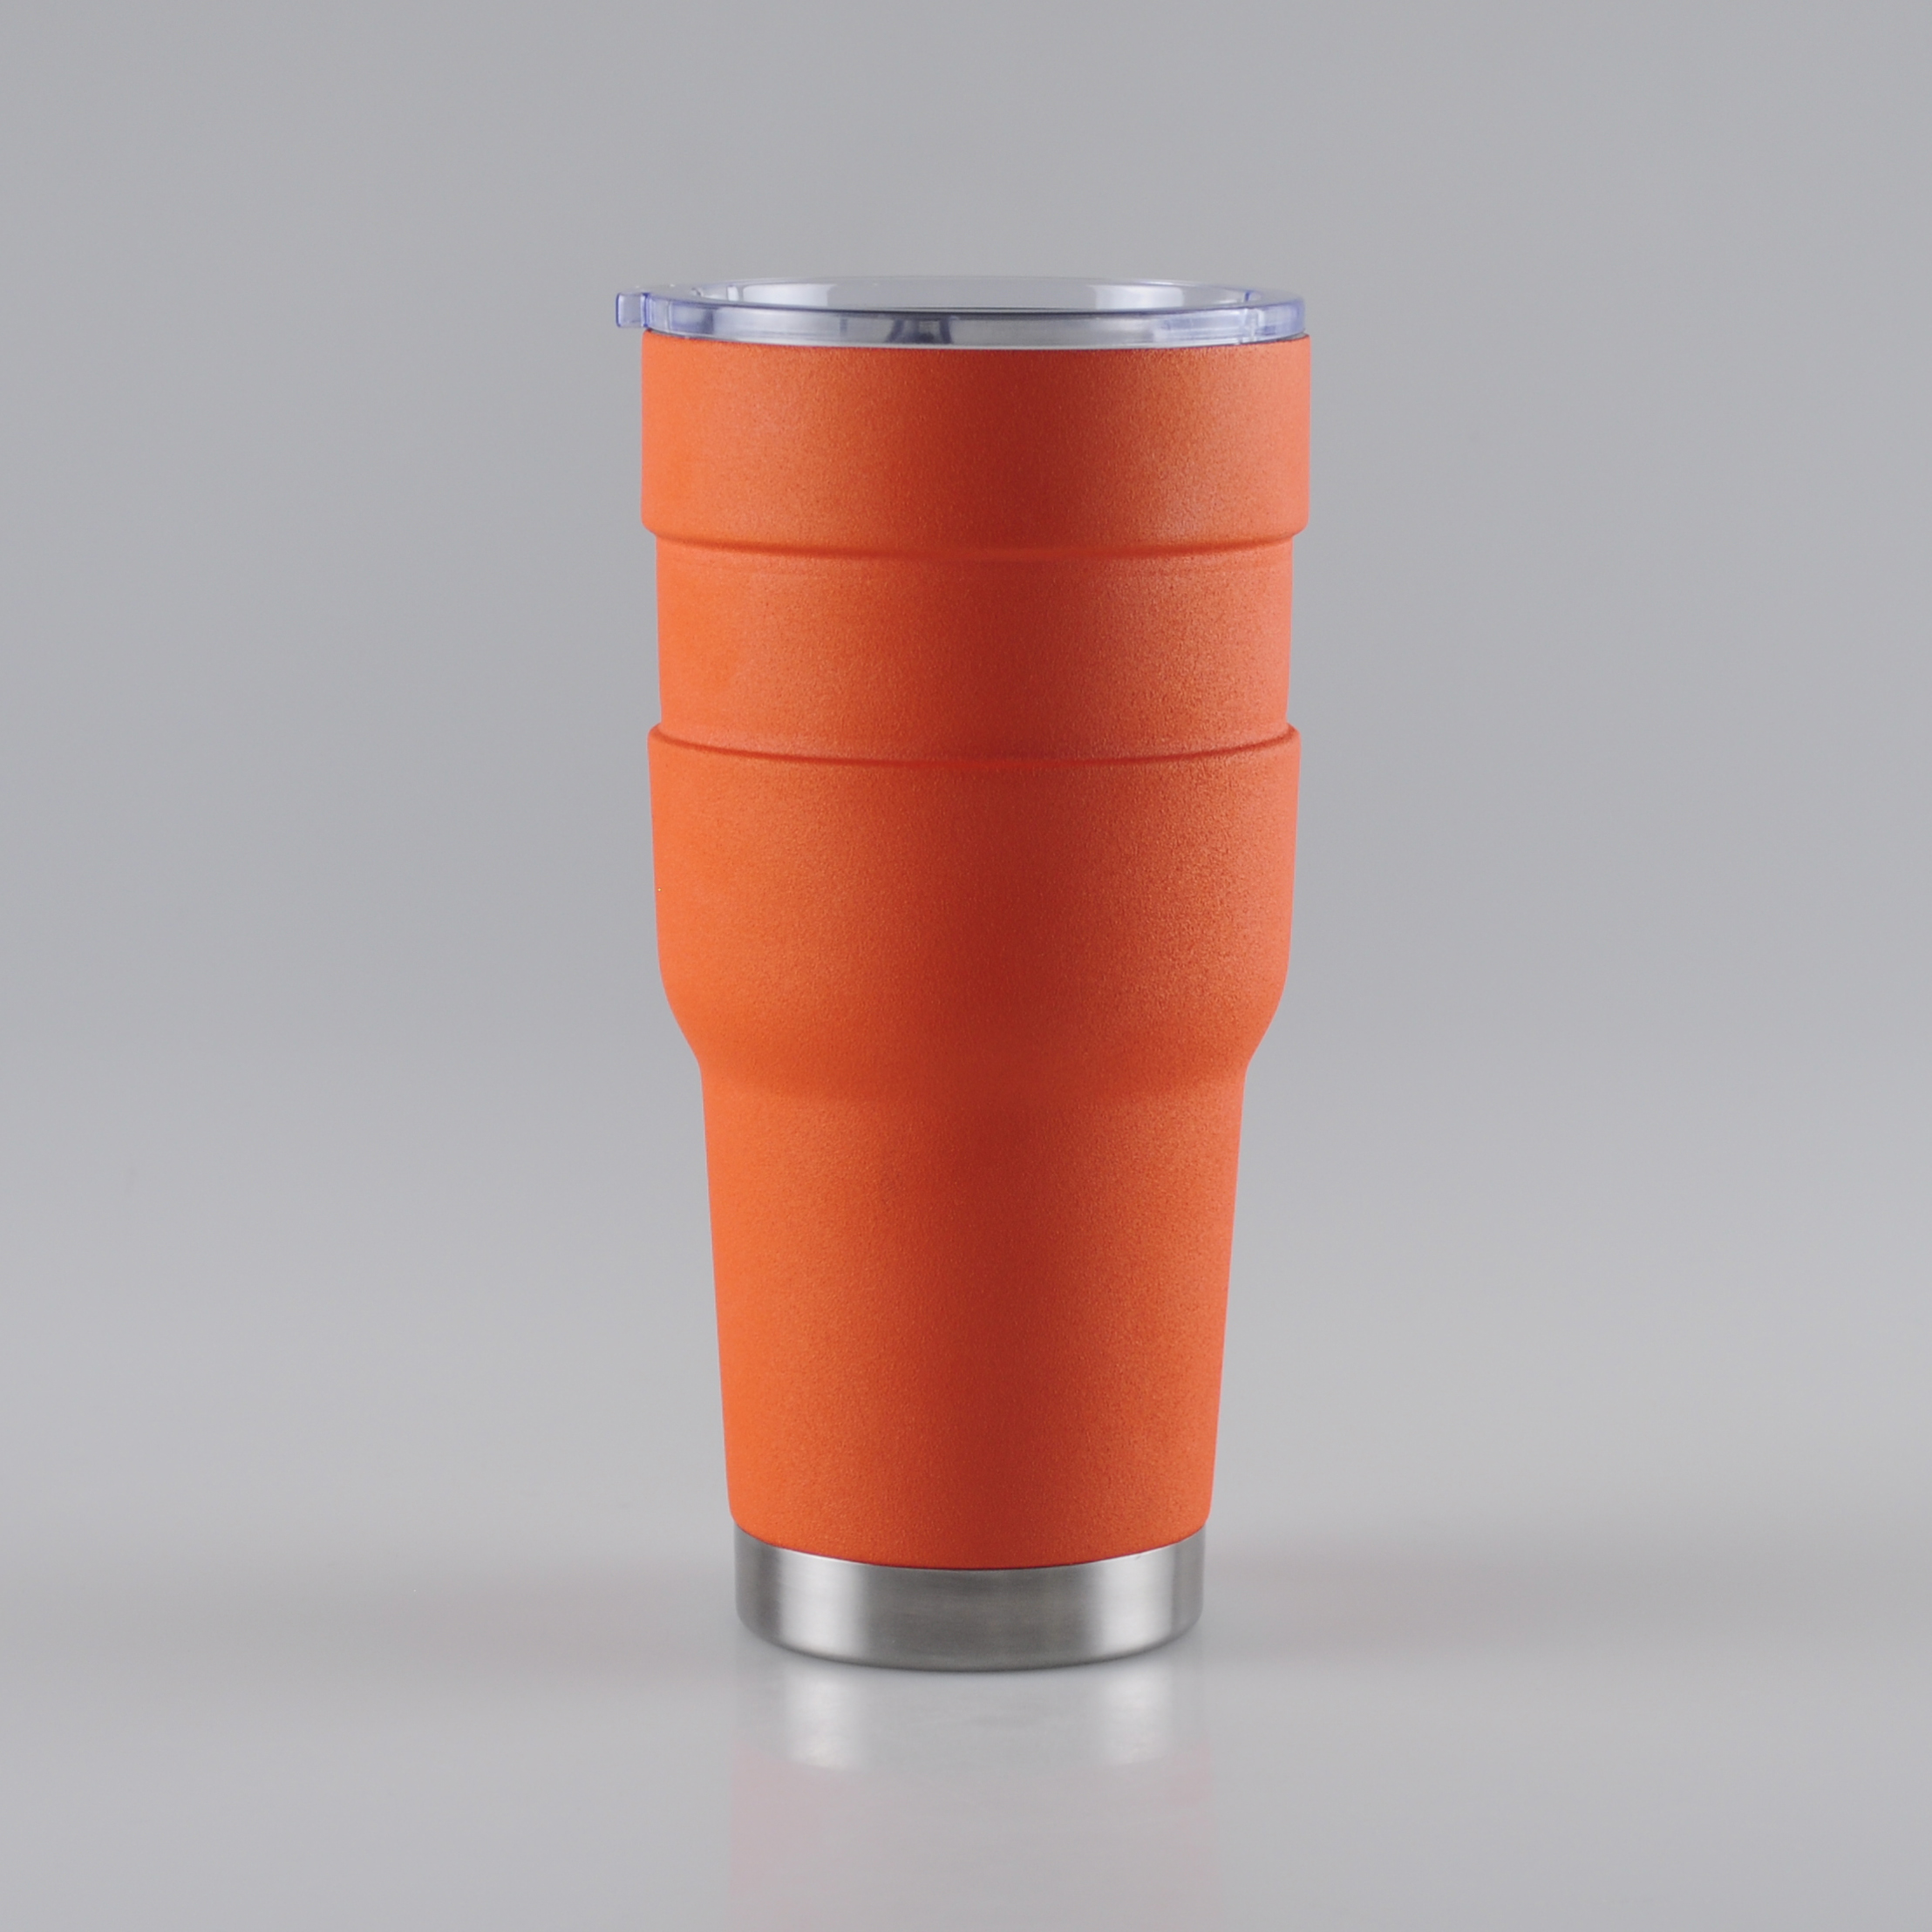 900ml-double-wall-insulated-coffee-mug-with-grab-design (1)